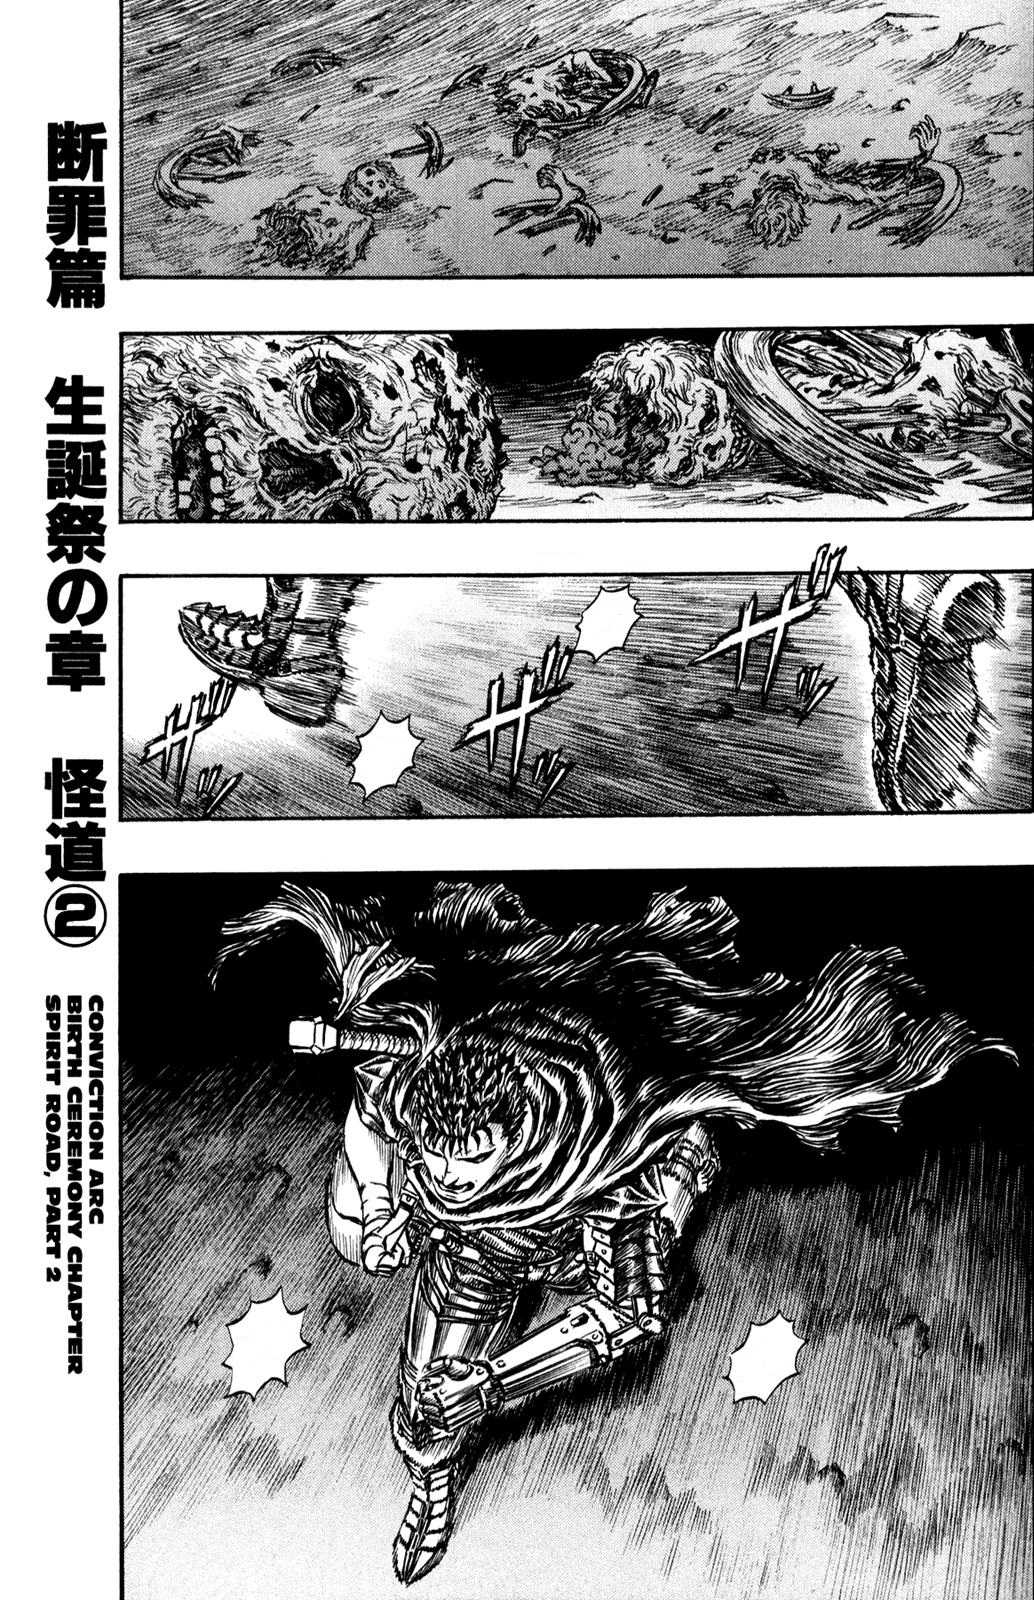 Featured image of post Berserk Manga Conviction Arc